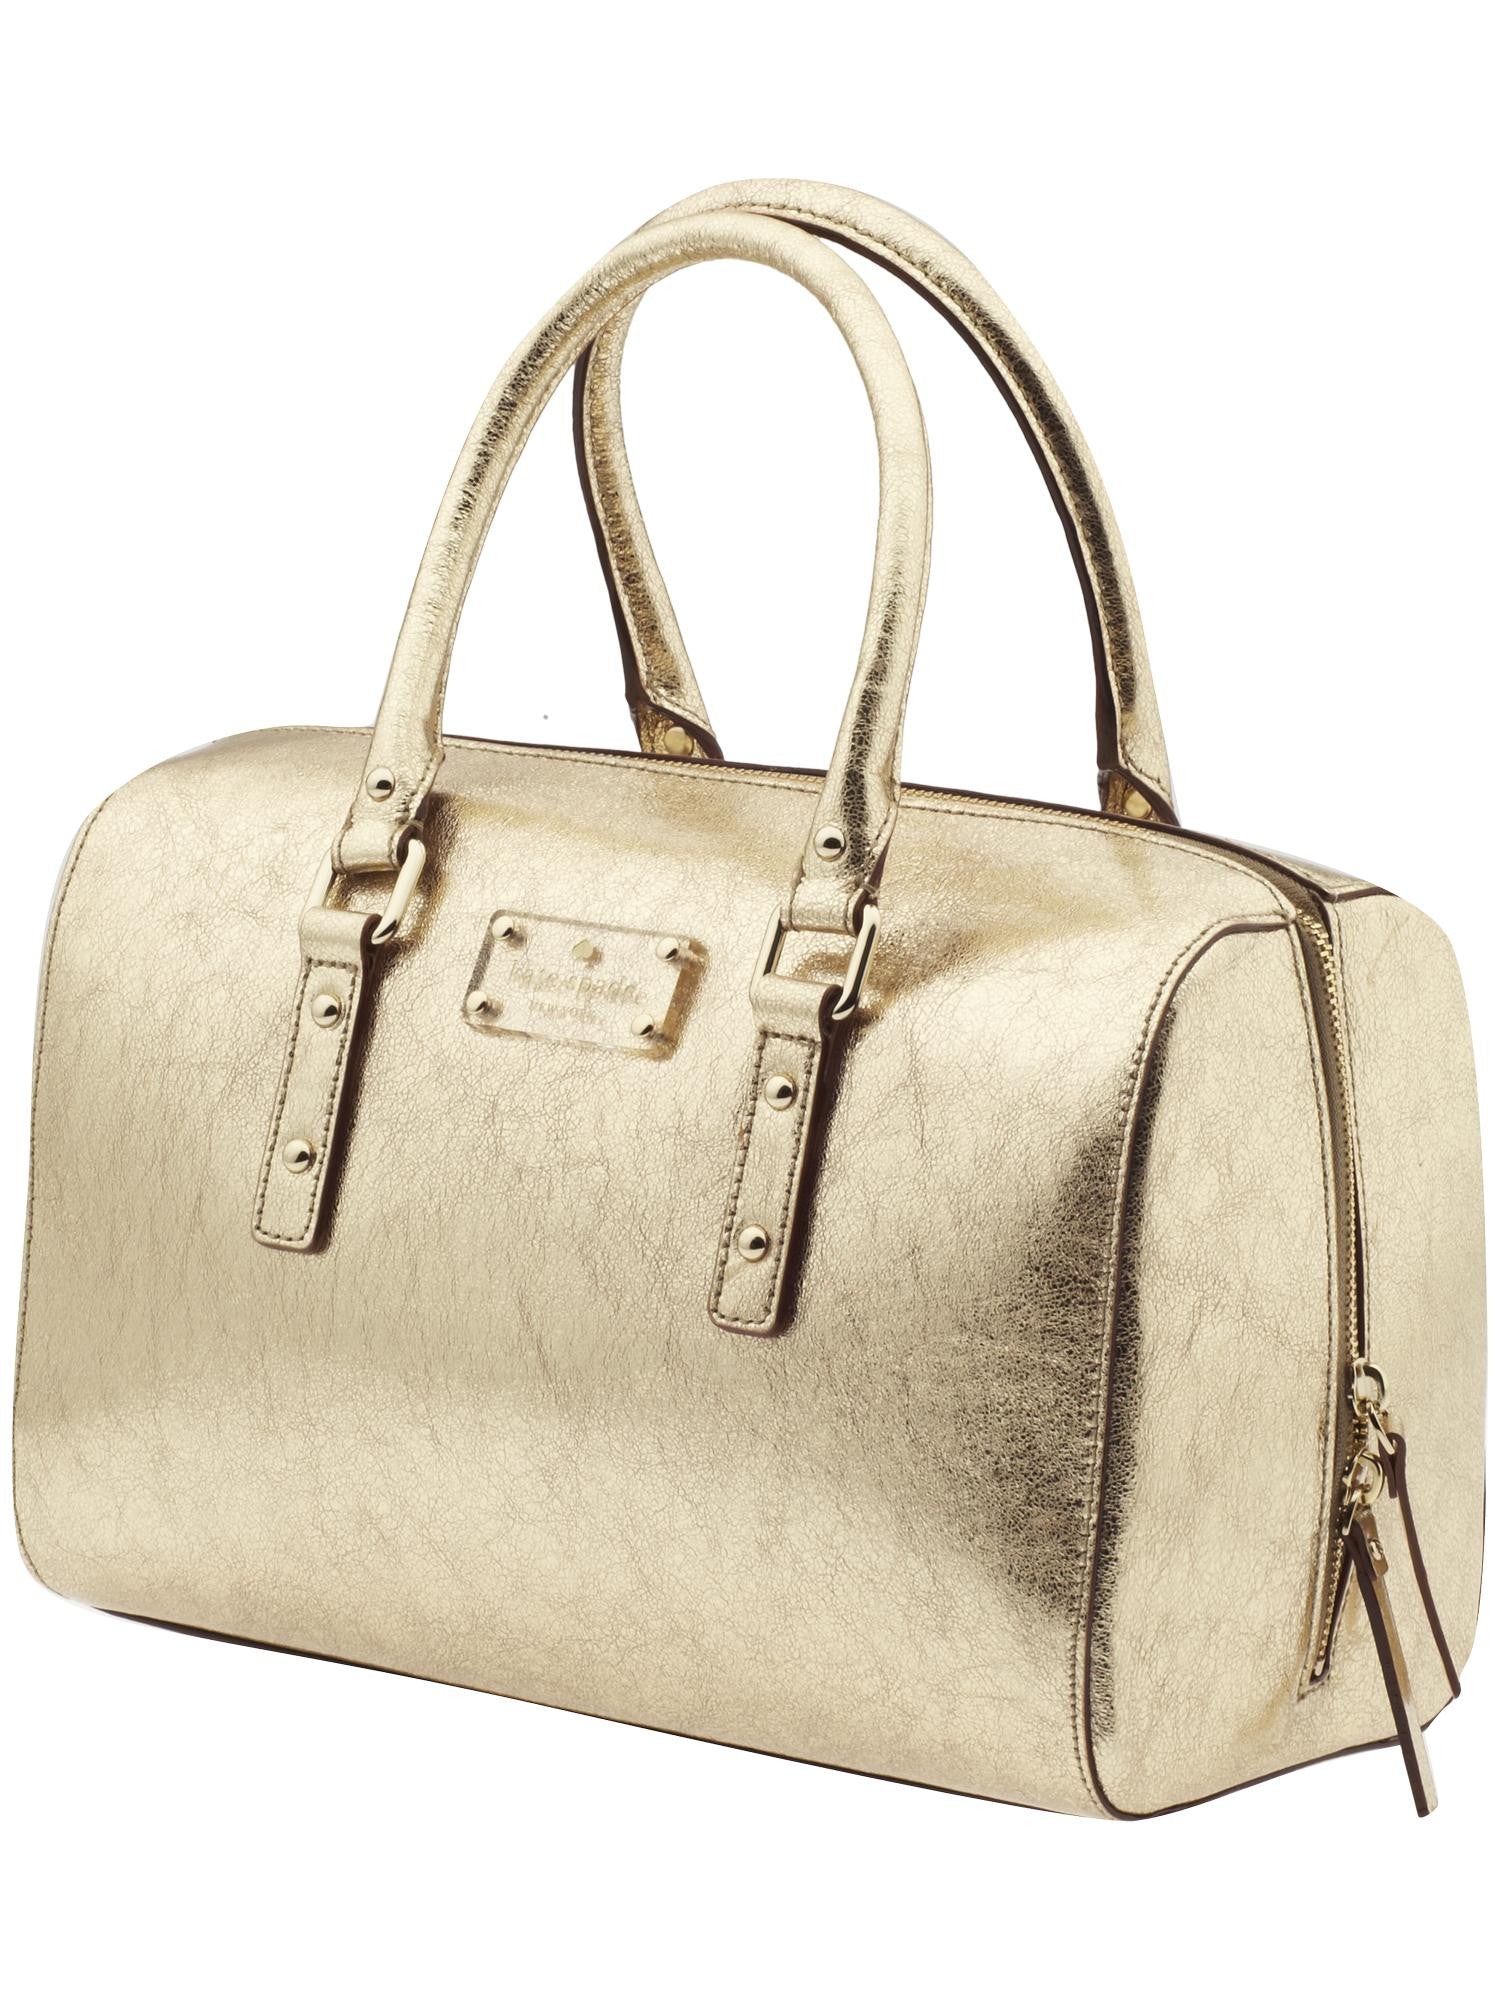 Kate Spade New York Glitter Crossbody Bag ONLY $34.97 (Reg $239) - Daily  Deals & Coupons